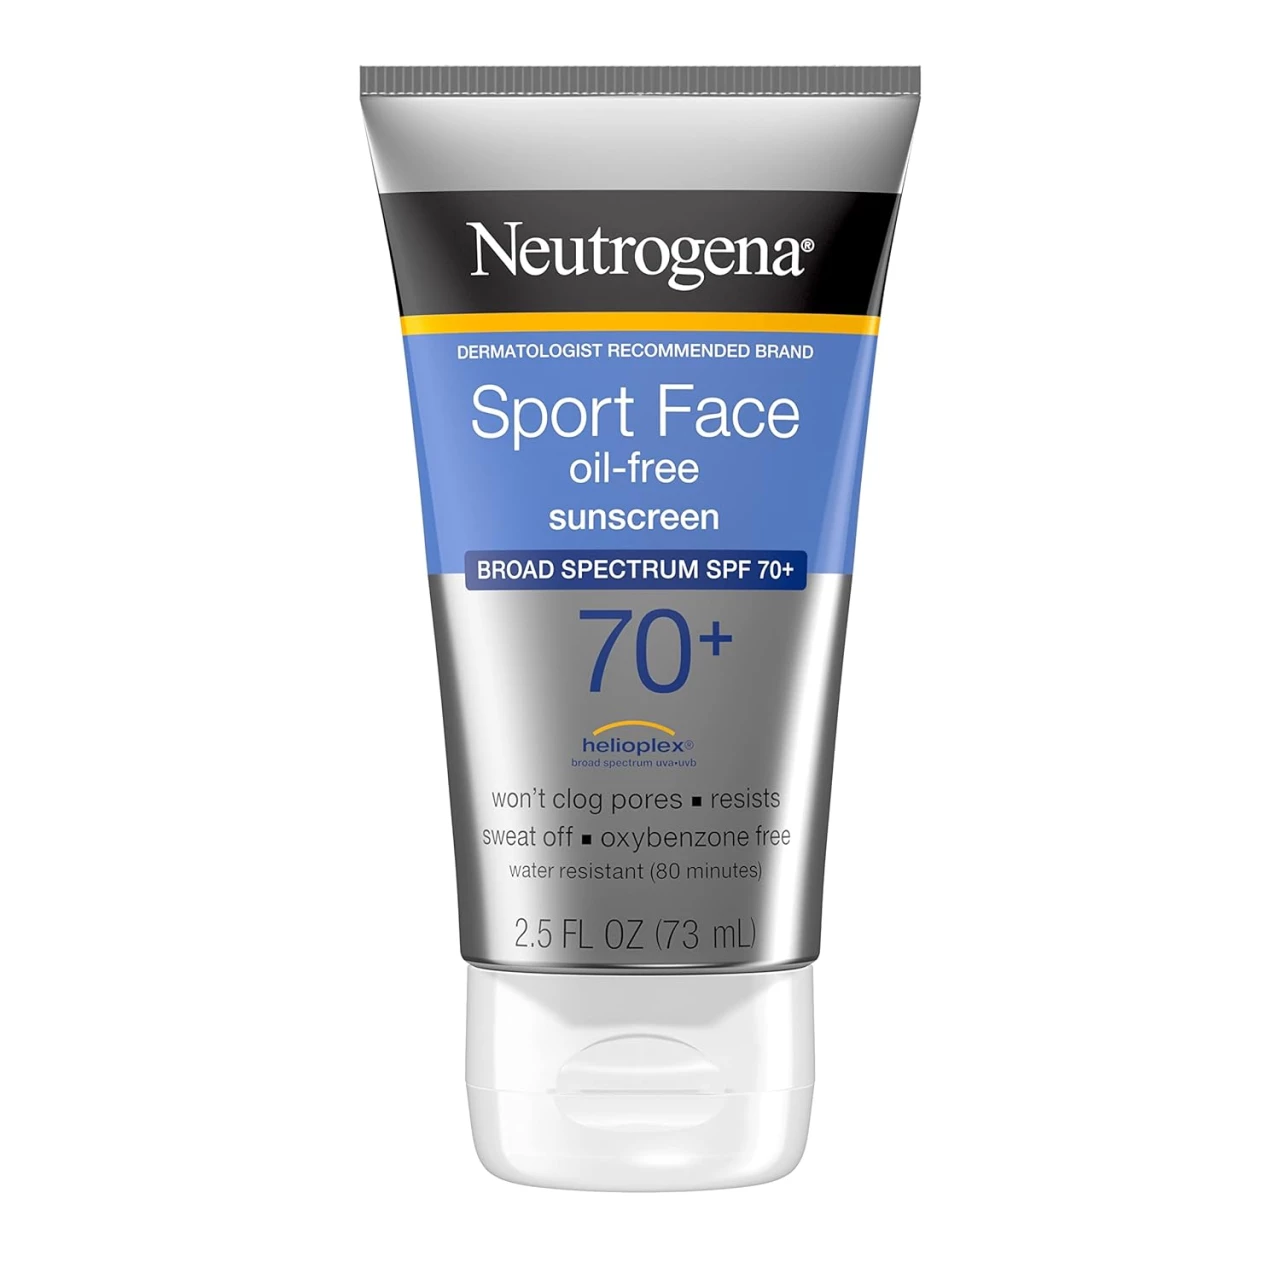 Neutrogena Sport Face Sunscreen SPF 70+, Oil-Free Facial Sunscreen Lotion